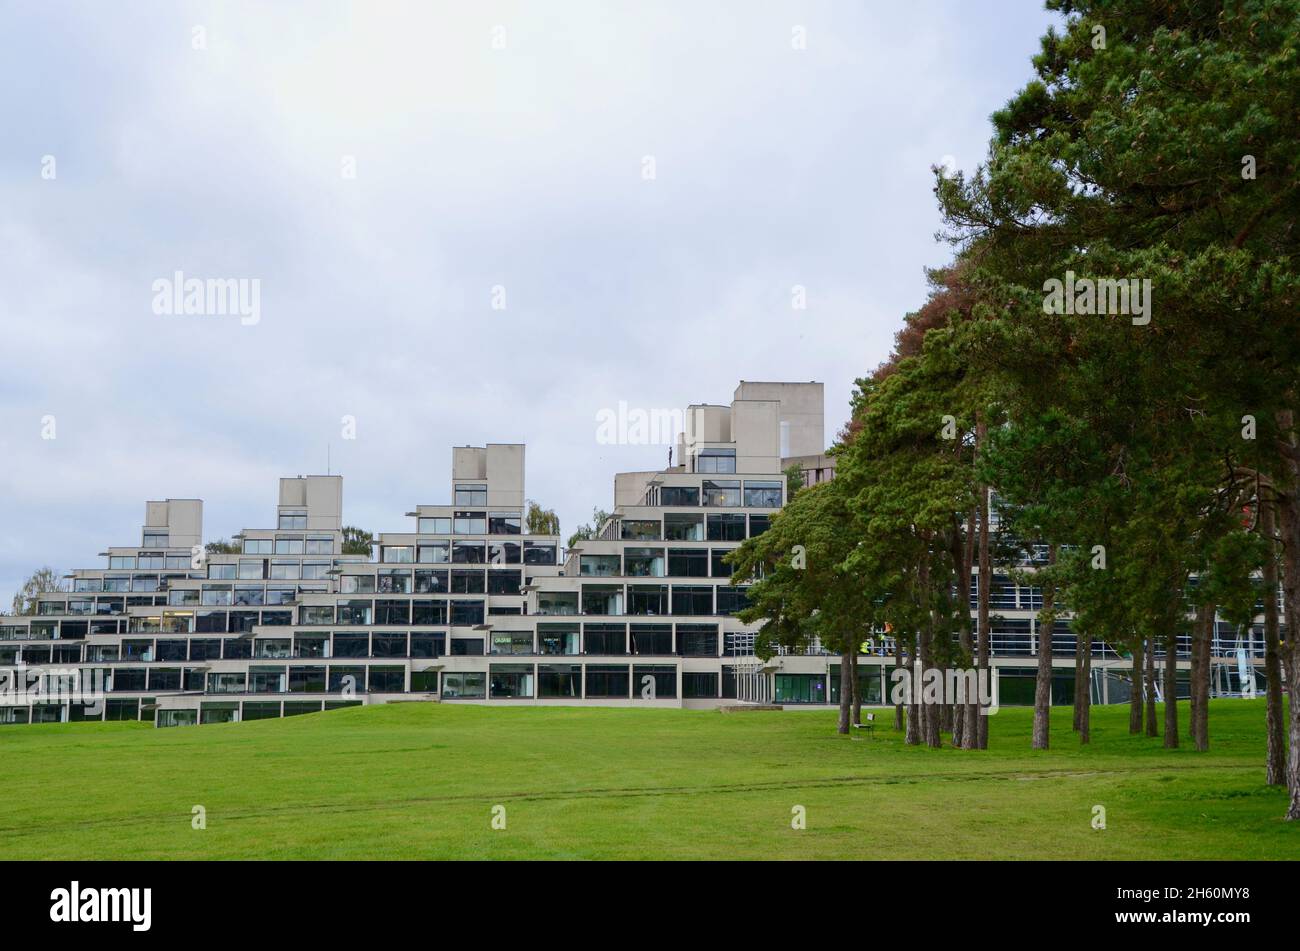 University of East Anglia ziggurats student halls by denys lasdun example of brutalist architecture norwich norfolk england UK Stock Photo